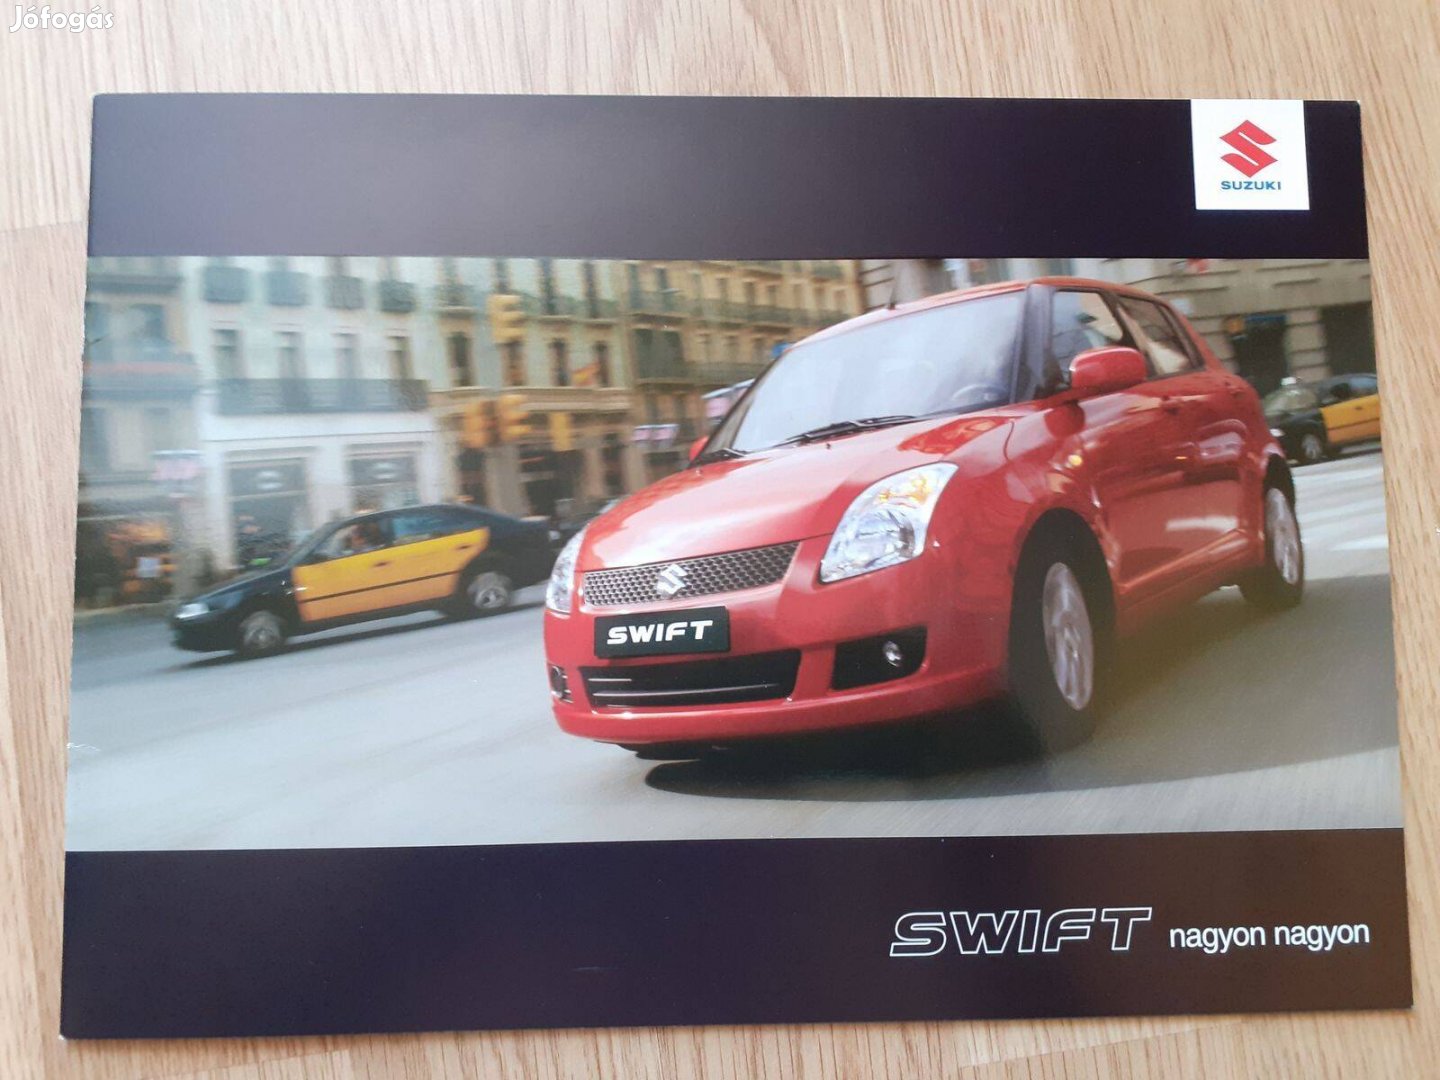 Suzuki Swift prospektus - magyar nyelvű